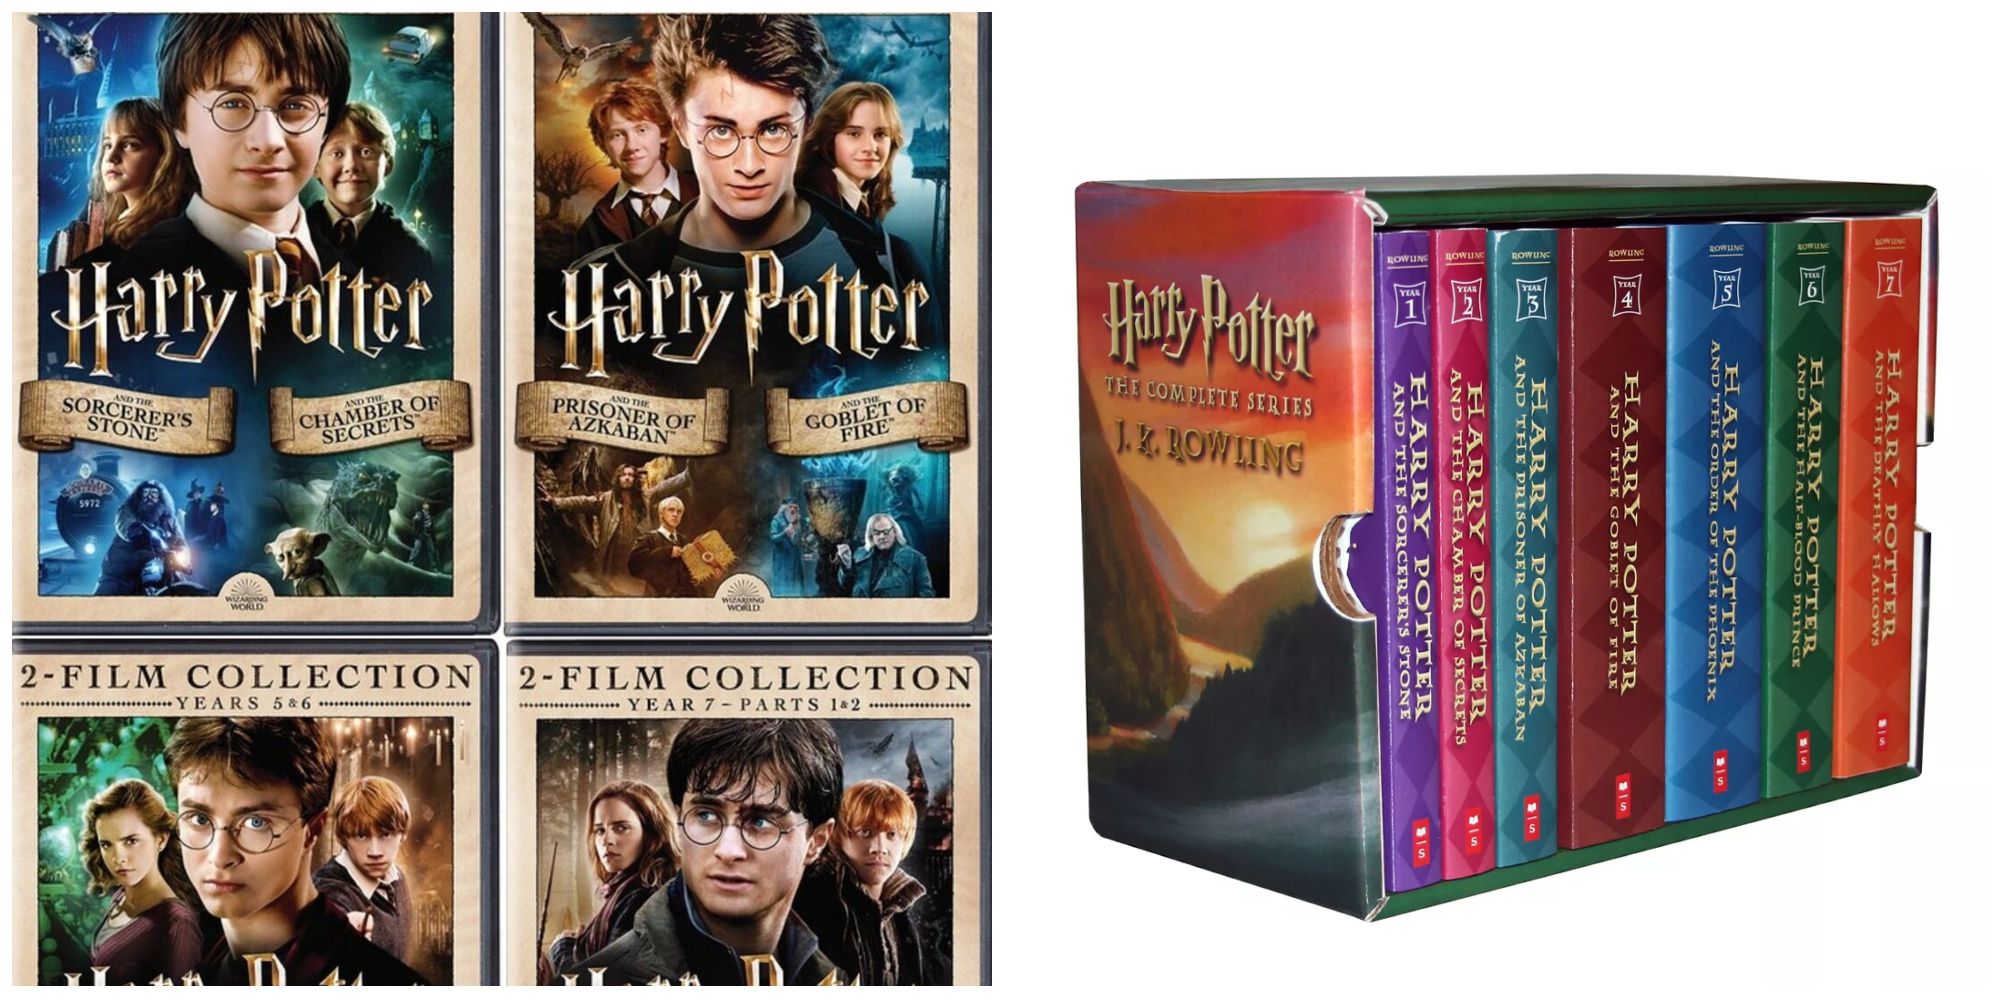 Harry Potter dvd set and book set